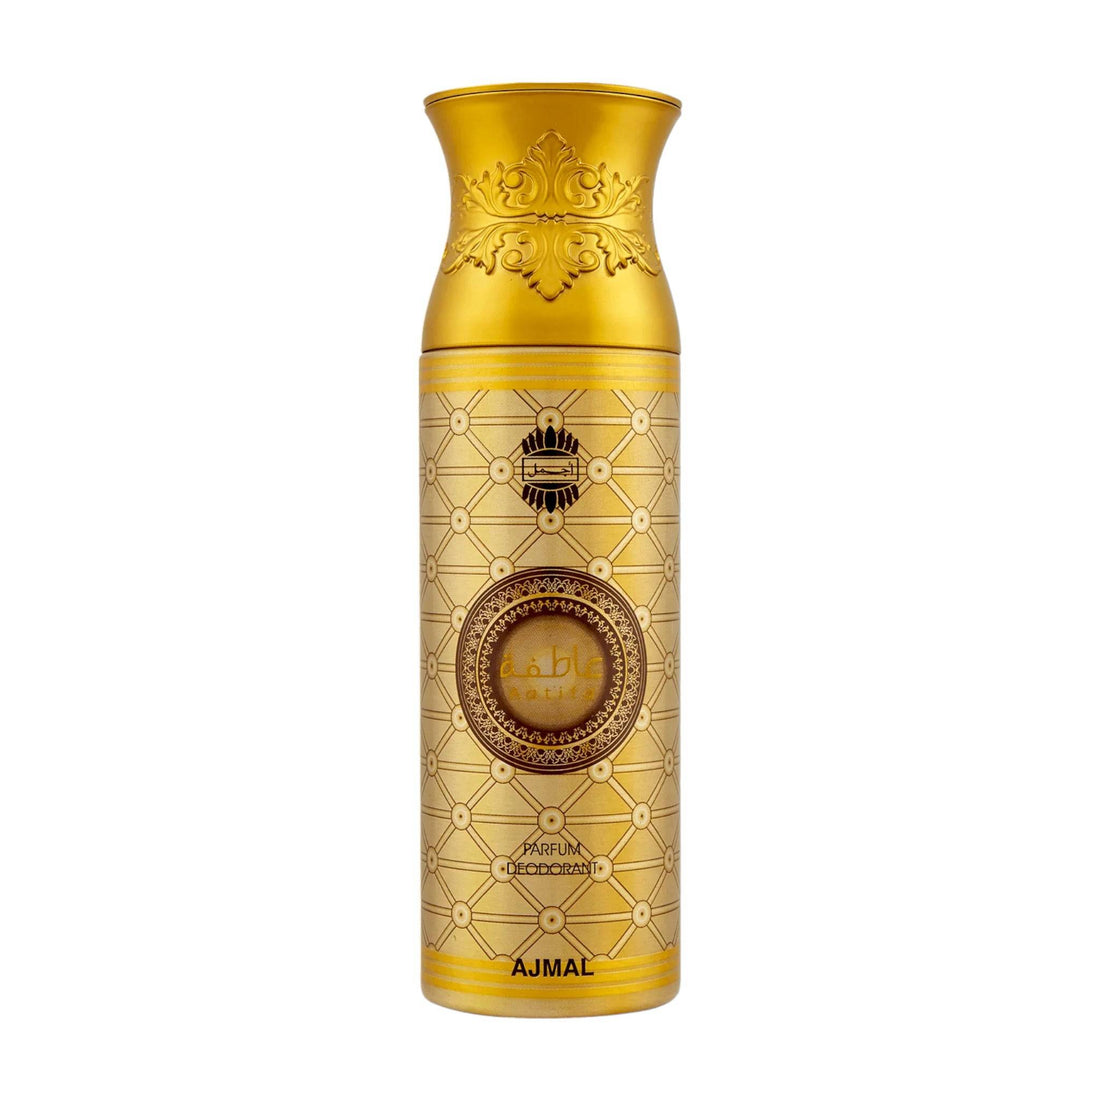 200ml bottle of Ajmal Aatifa Deodorant, showcasing its elegant design and unisex appeal.